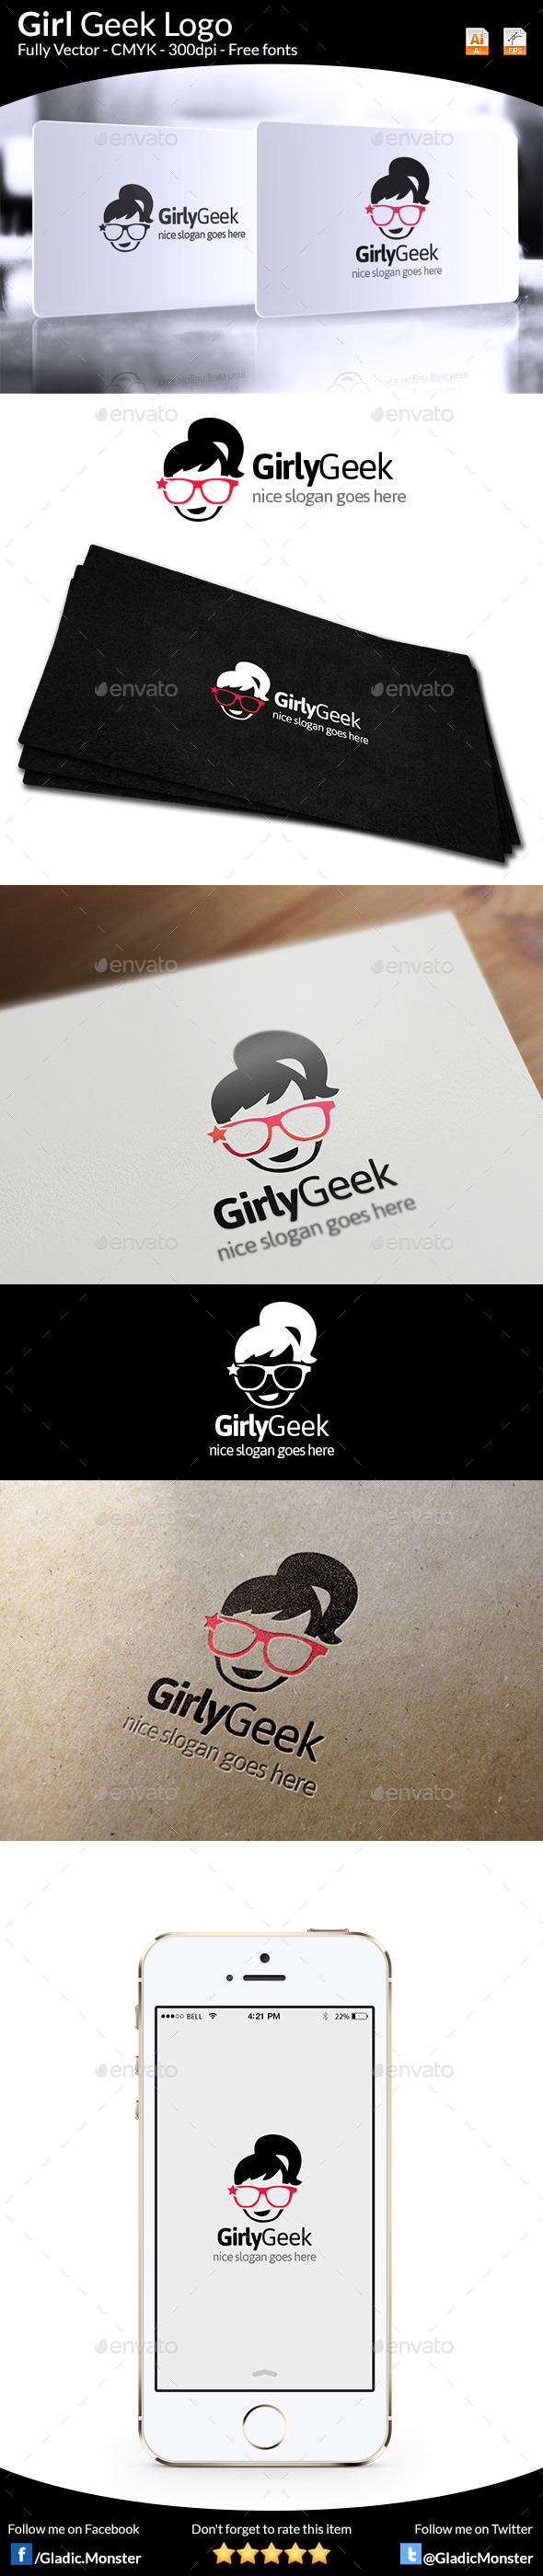 Girl Geek Logo